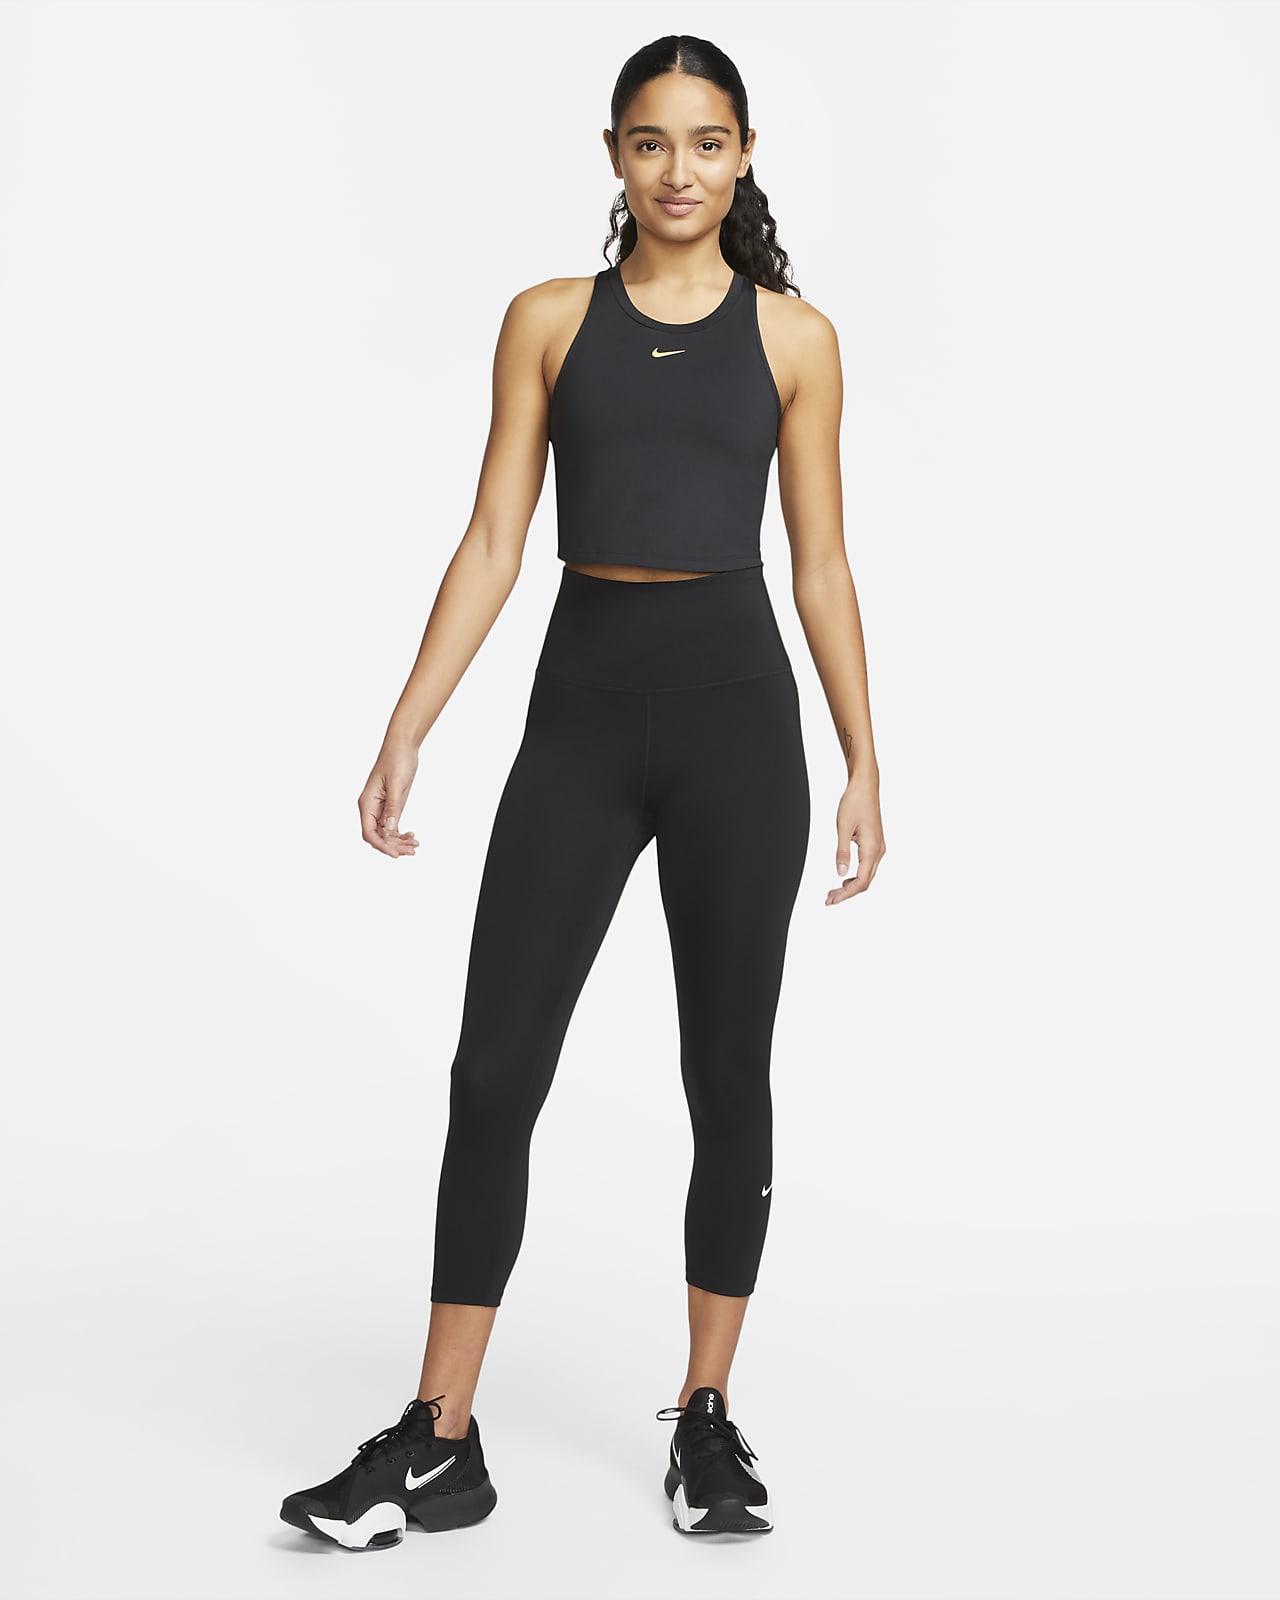 Women's leggings Nike Dri-Fit One High-Rise Leggings - fireberry/white, Tennis Zone